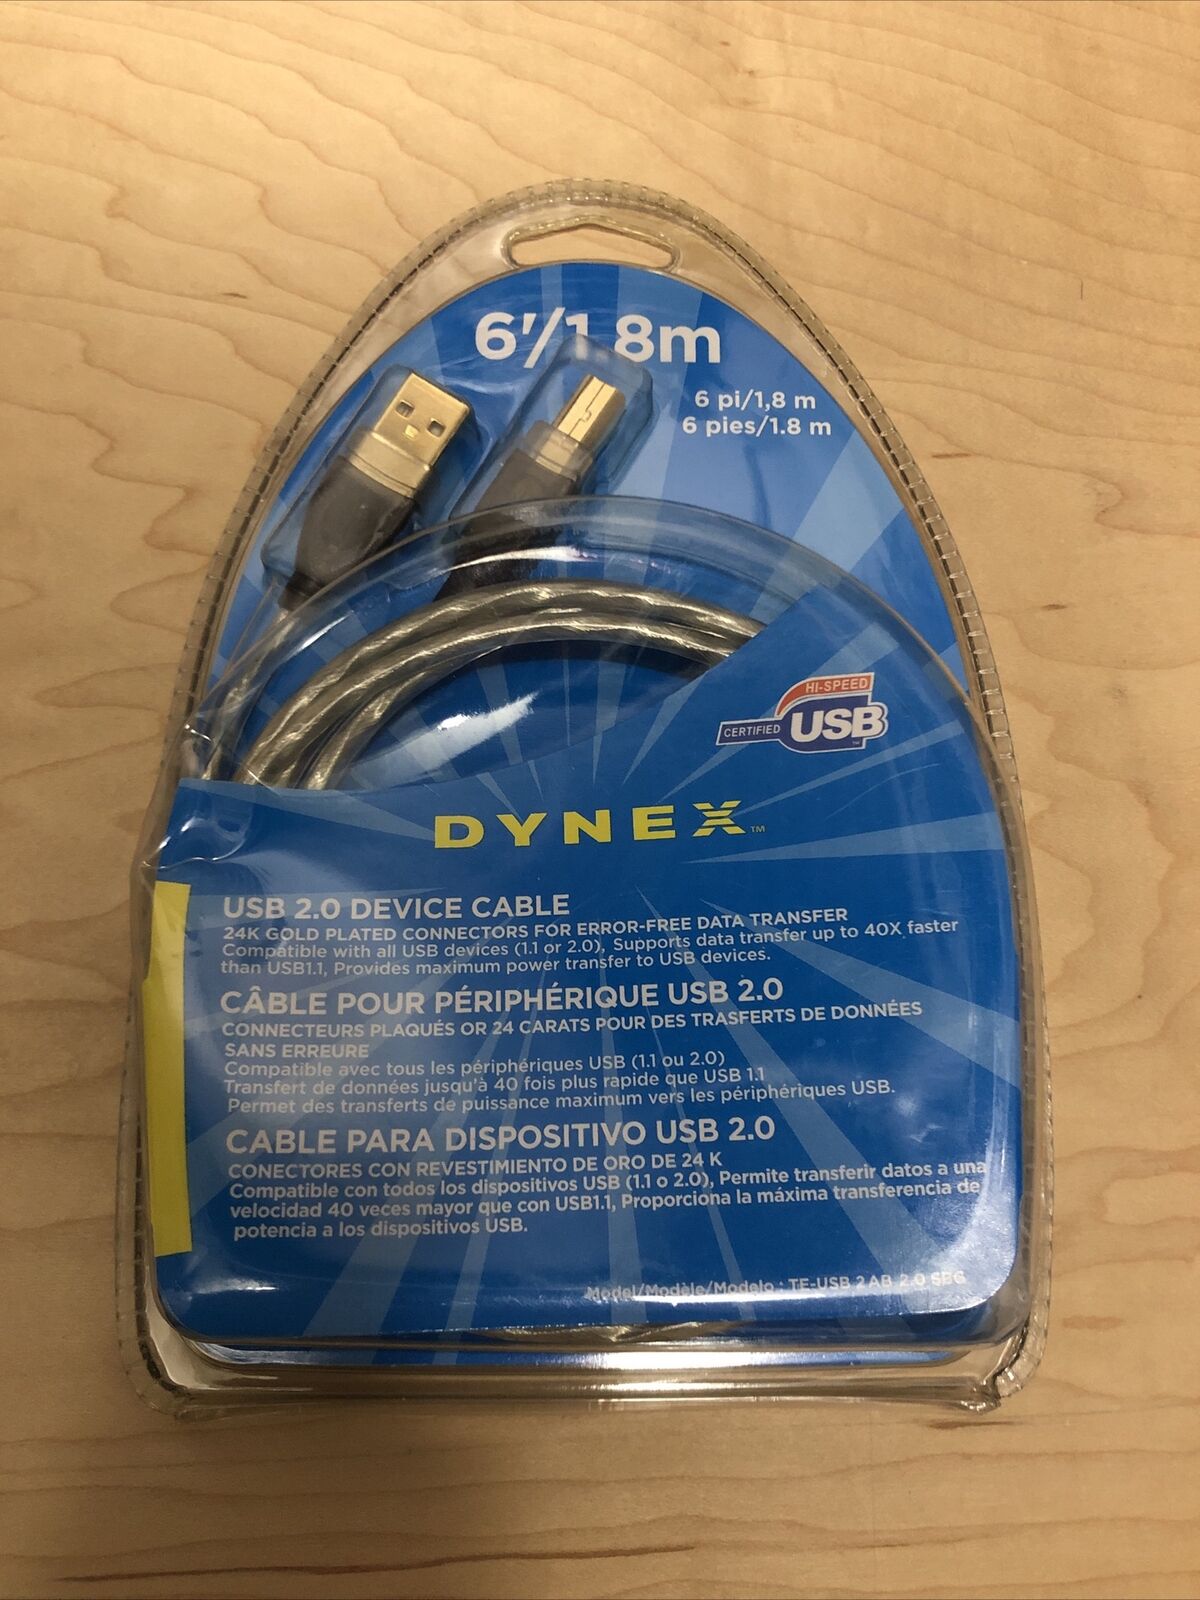 Dynex USB 2.0. A-B DEVICE CABLE 6 FEET 1.8 m NEW SEALED I-1129B